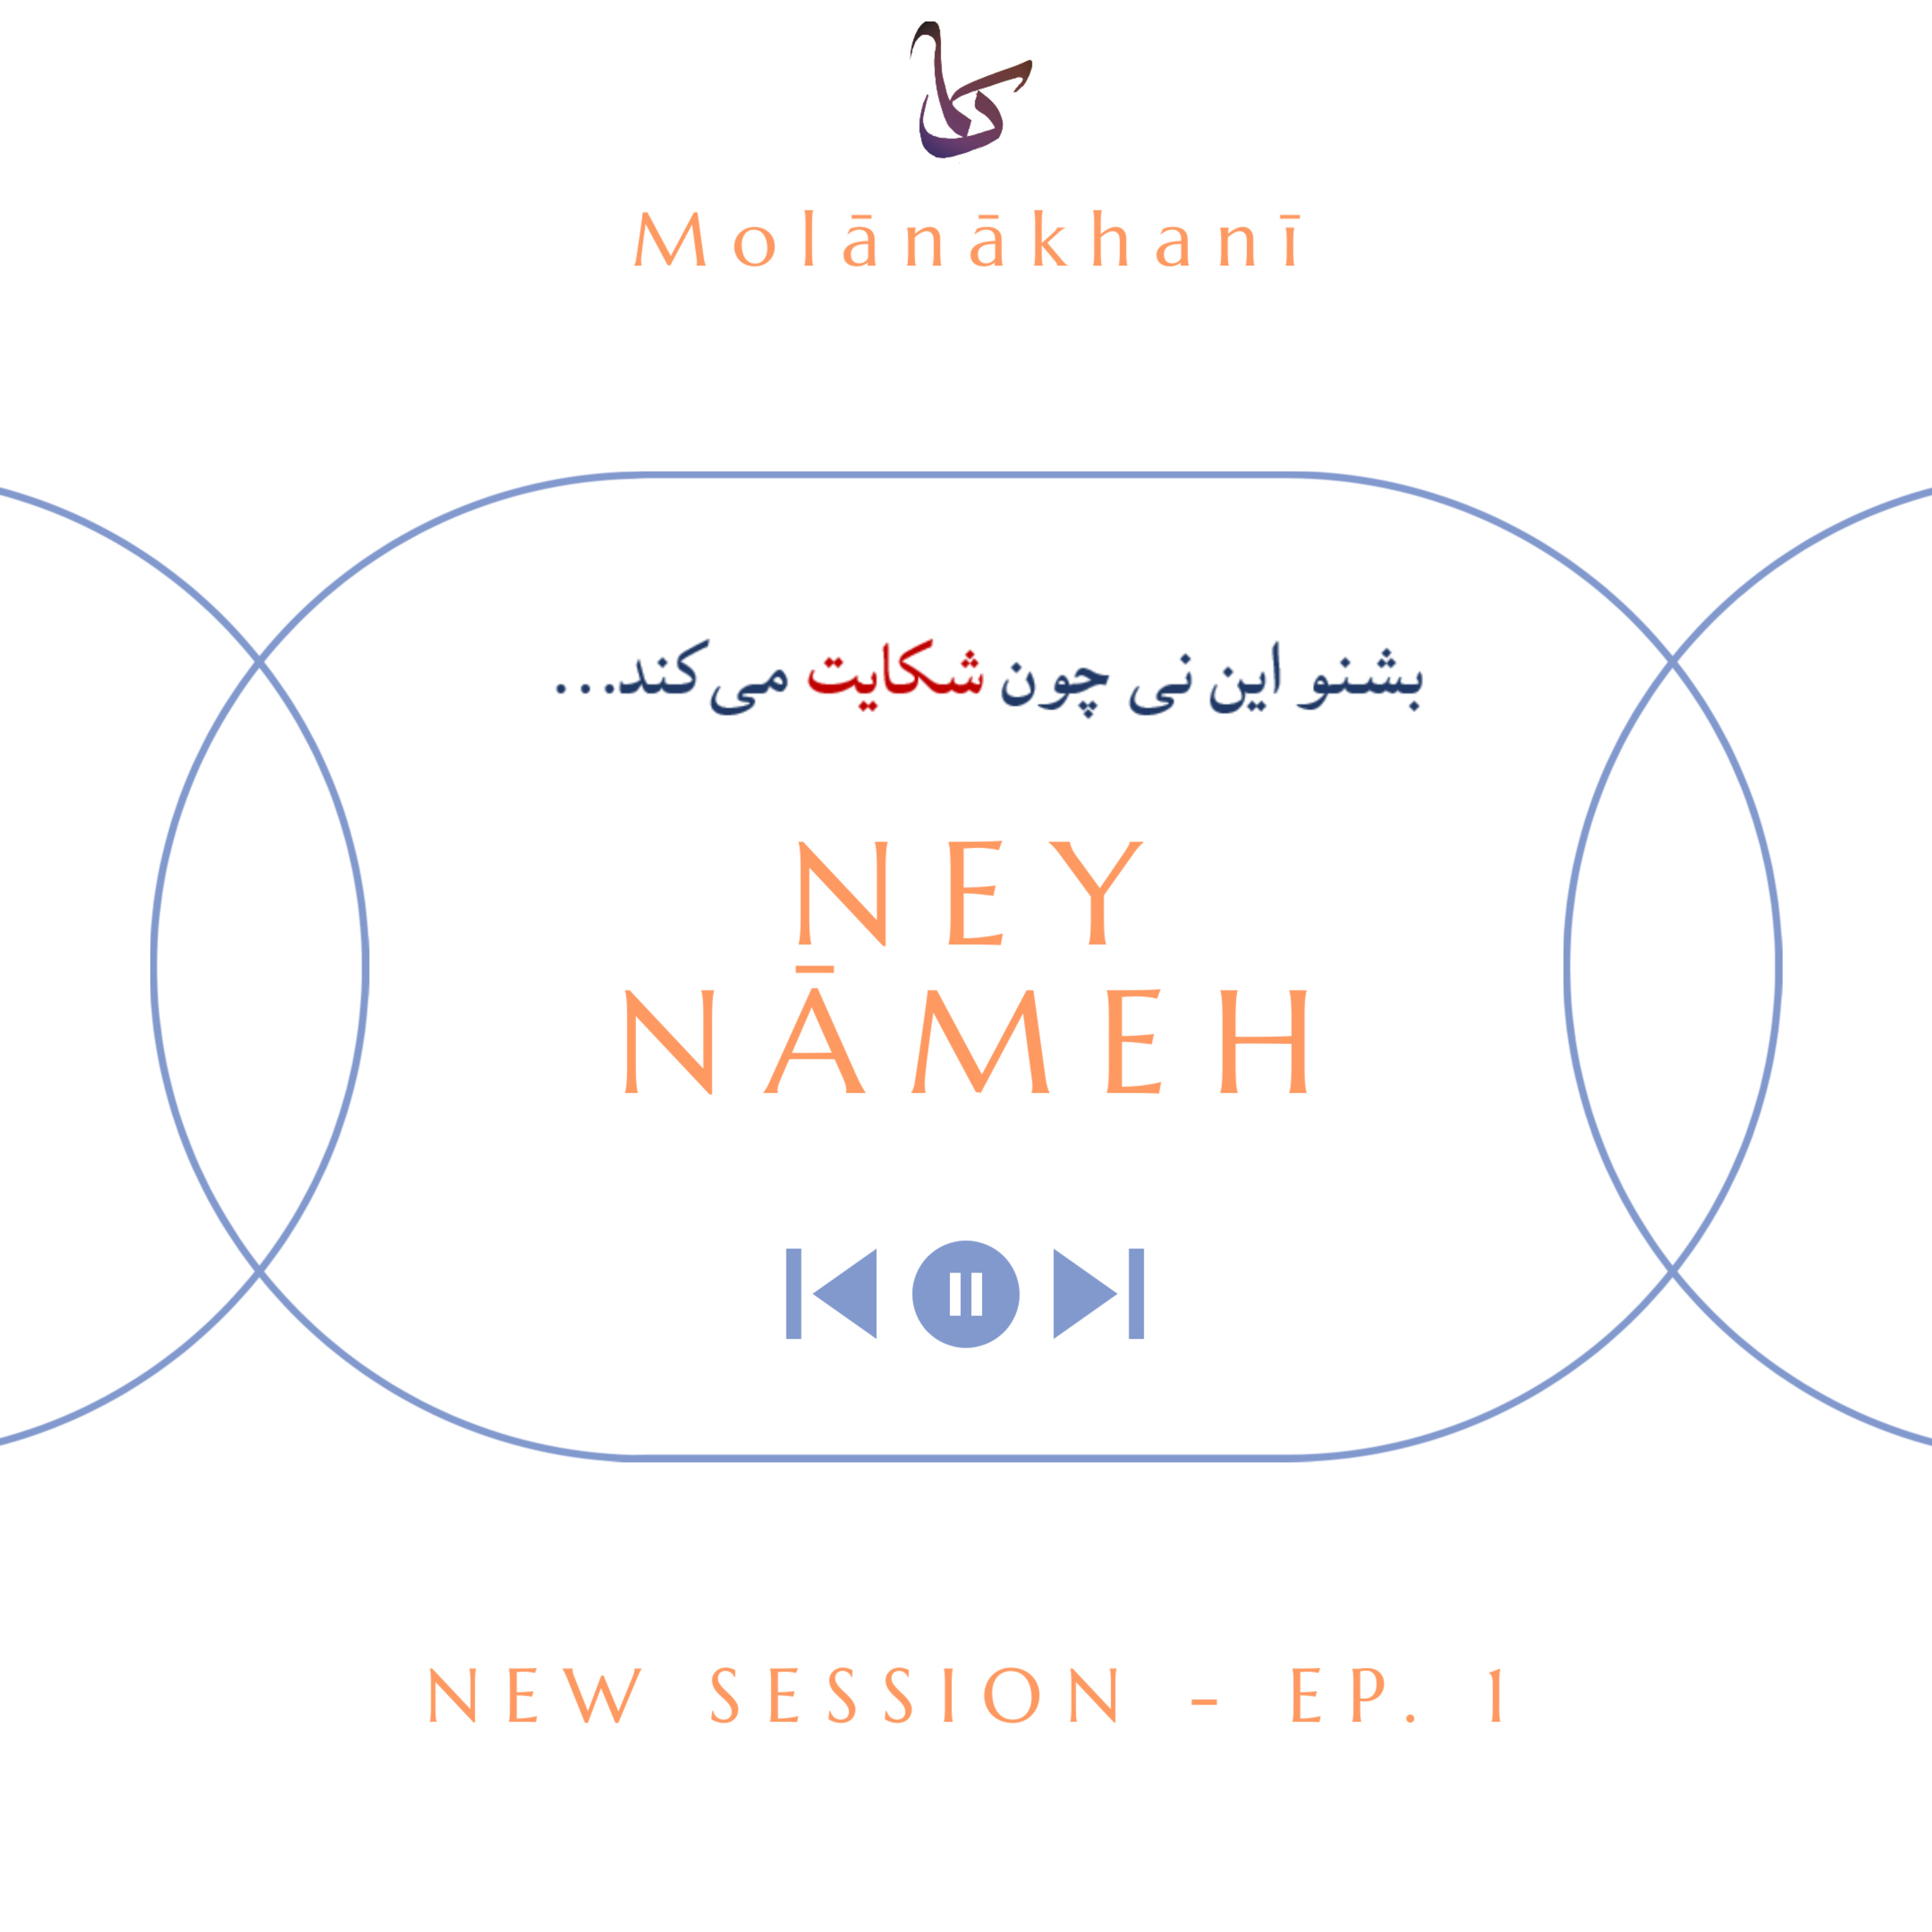 Molanakhani - New Session - Ep1: Ney Nāmeh// مولاناخوانی؛ قسمت اول از دوره‌ی نو؛ نی‌نامه